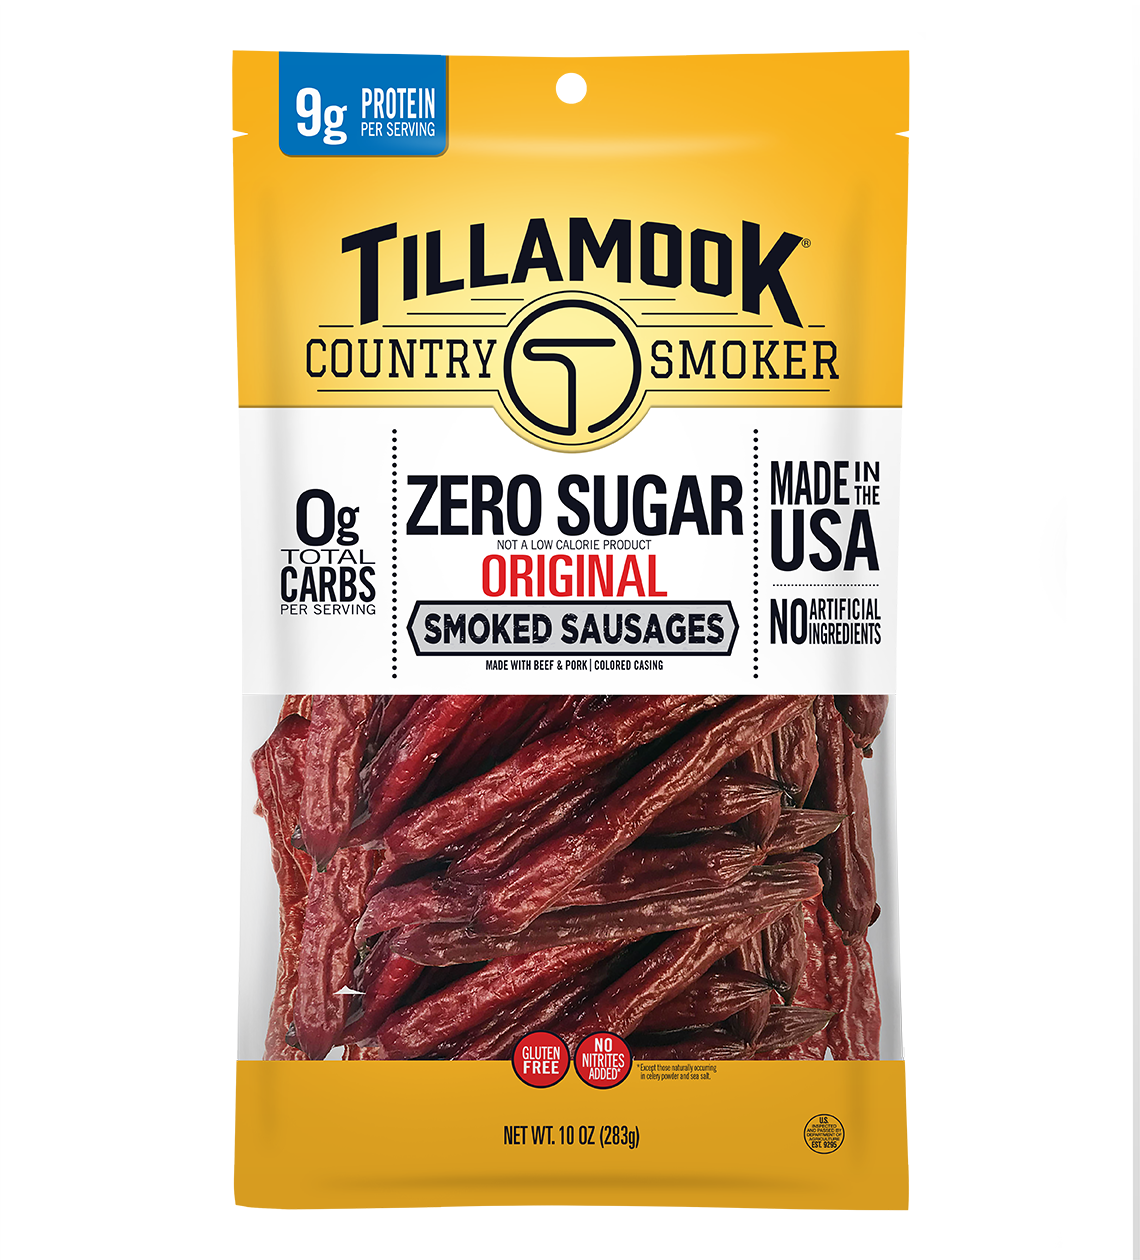 Tillamook Country Smoker Zero Sugar Smoked Sausages